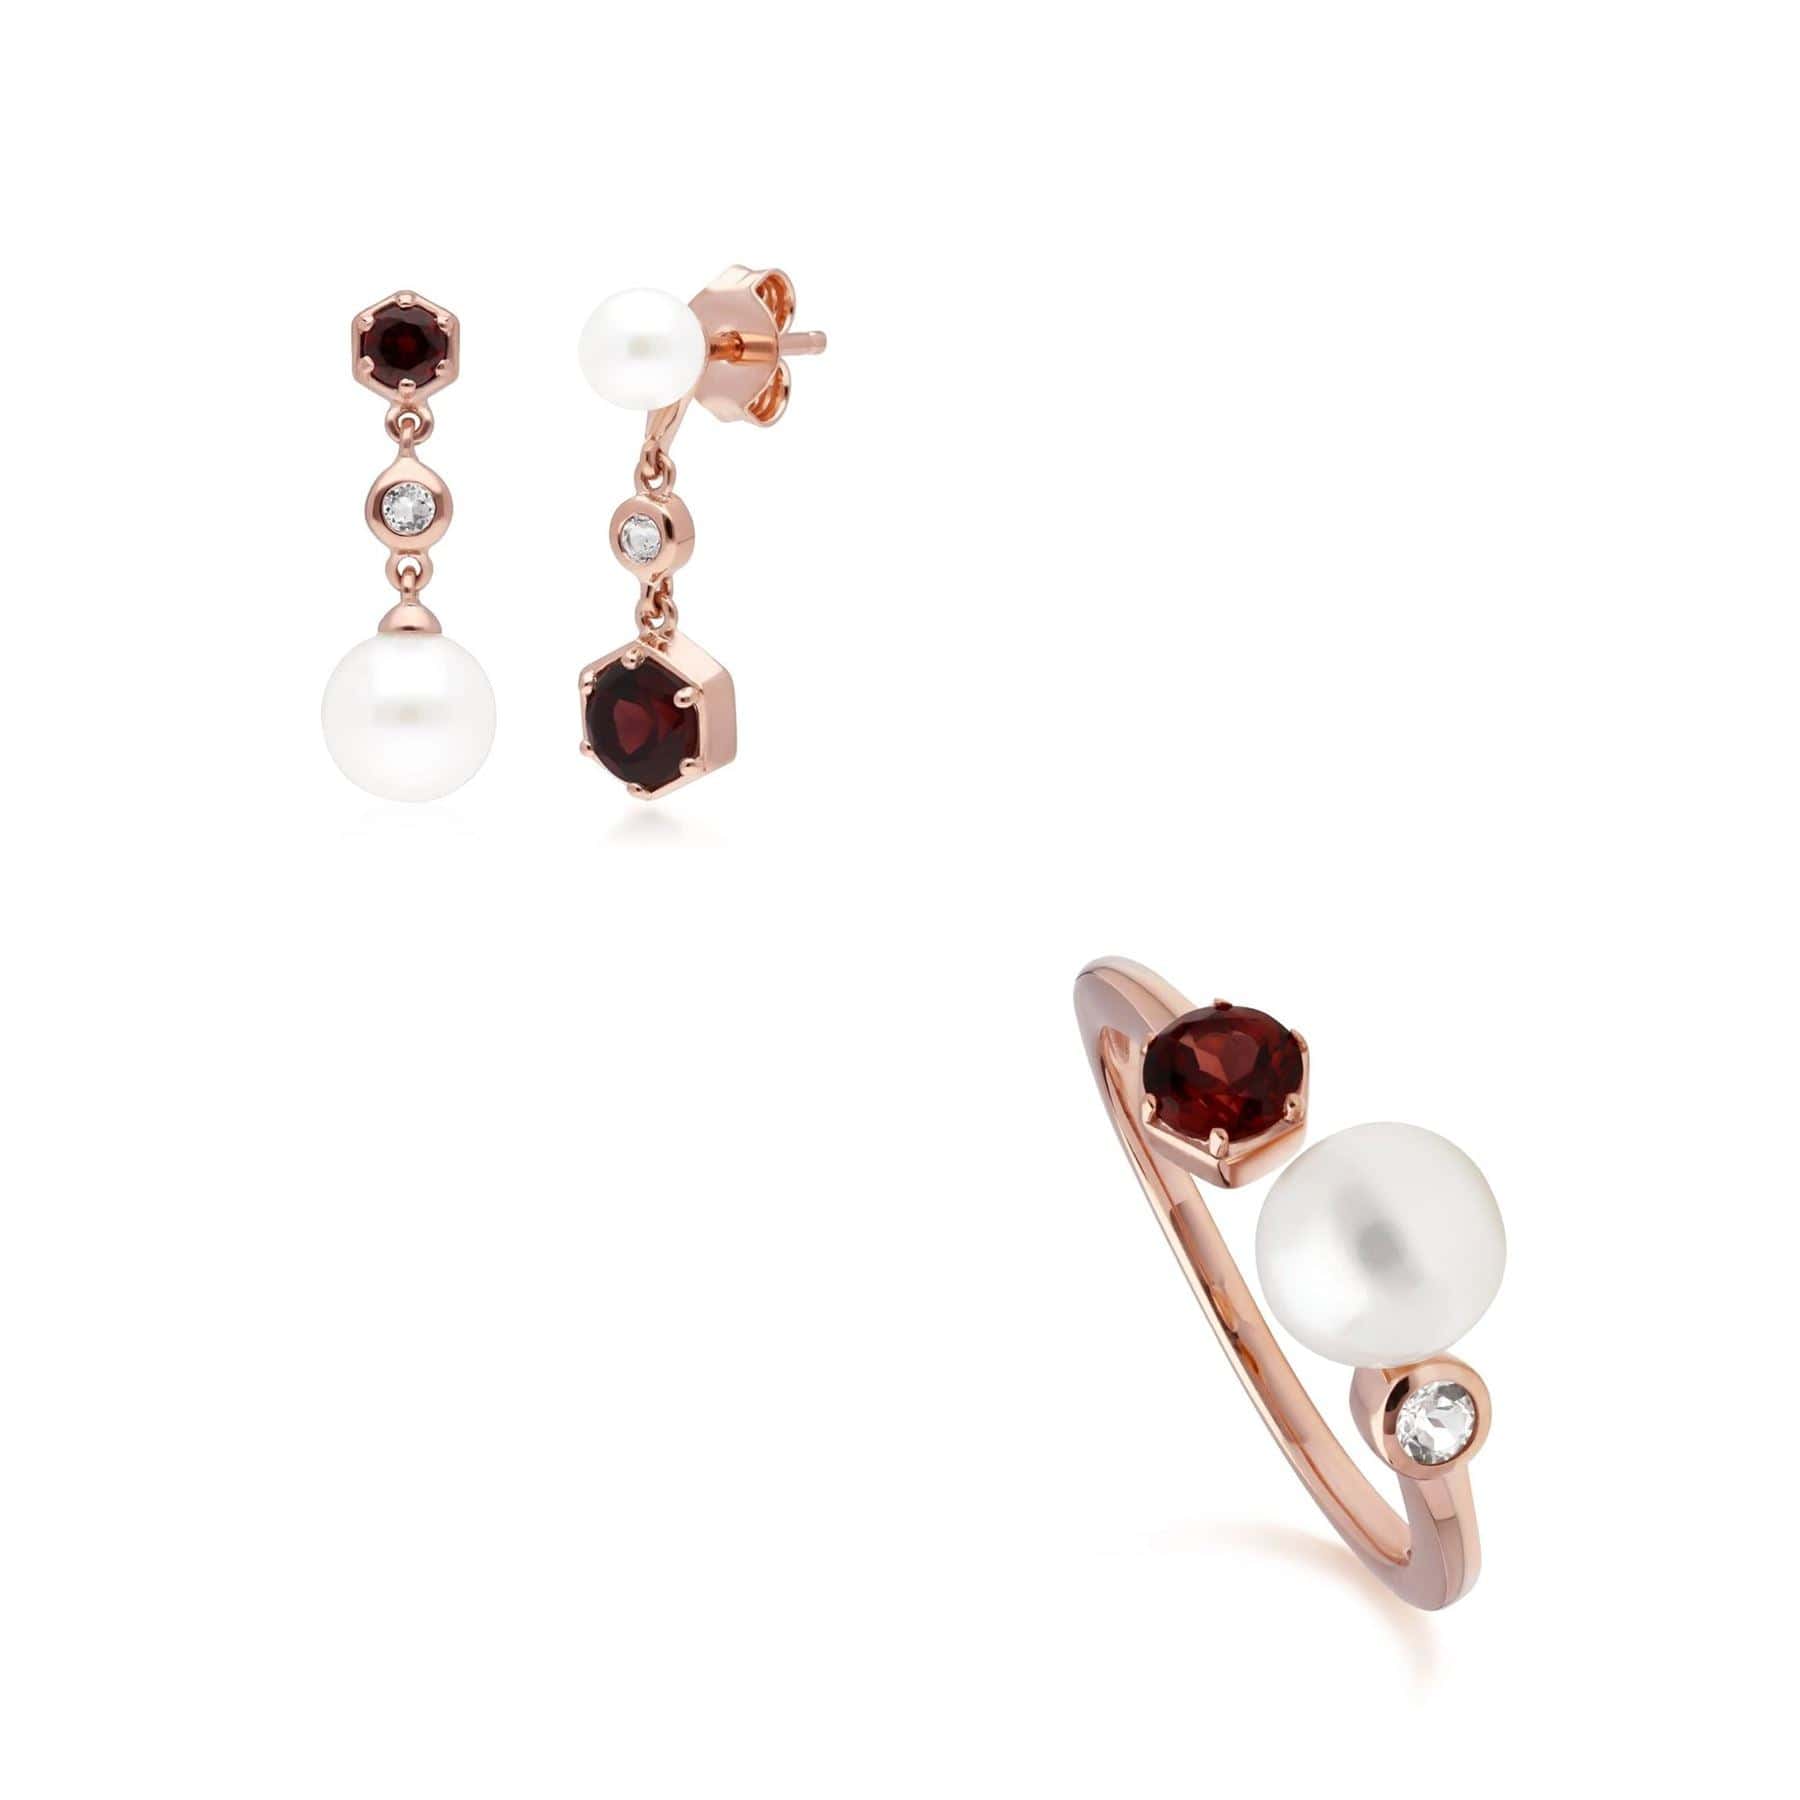 Modern Pearl, Garnet & Topaz Earring & Ring Set in Rose Gold Plated Sterling Silver - Gemondo